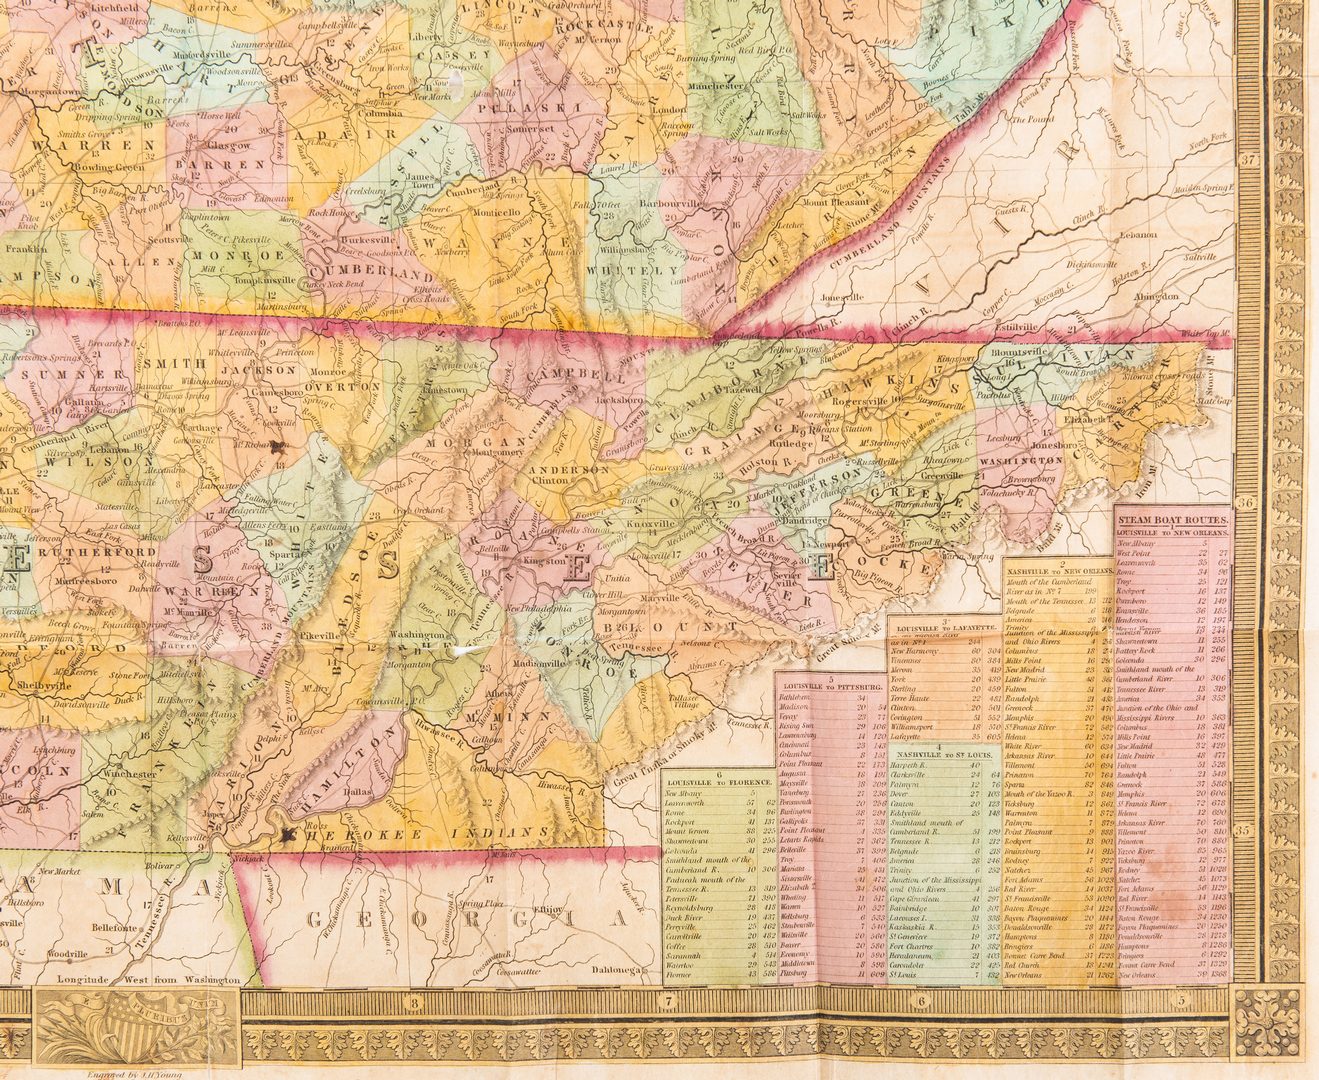 Lot 280: KY/TN Map, Civil War letter, Receipt, 3 items